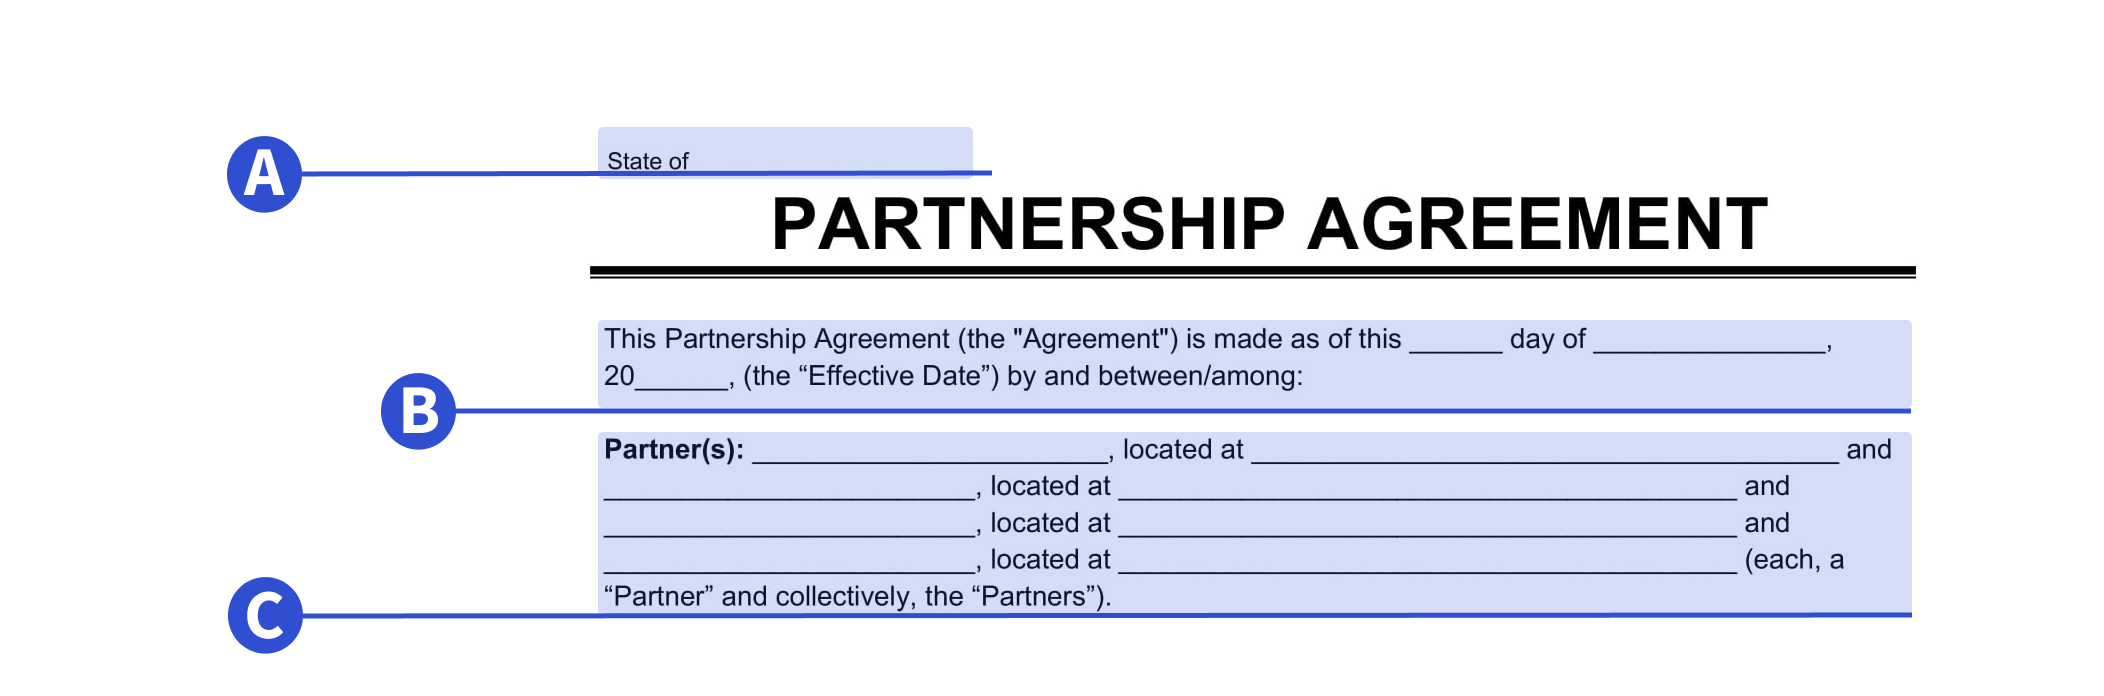 partnership agreement partner details